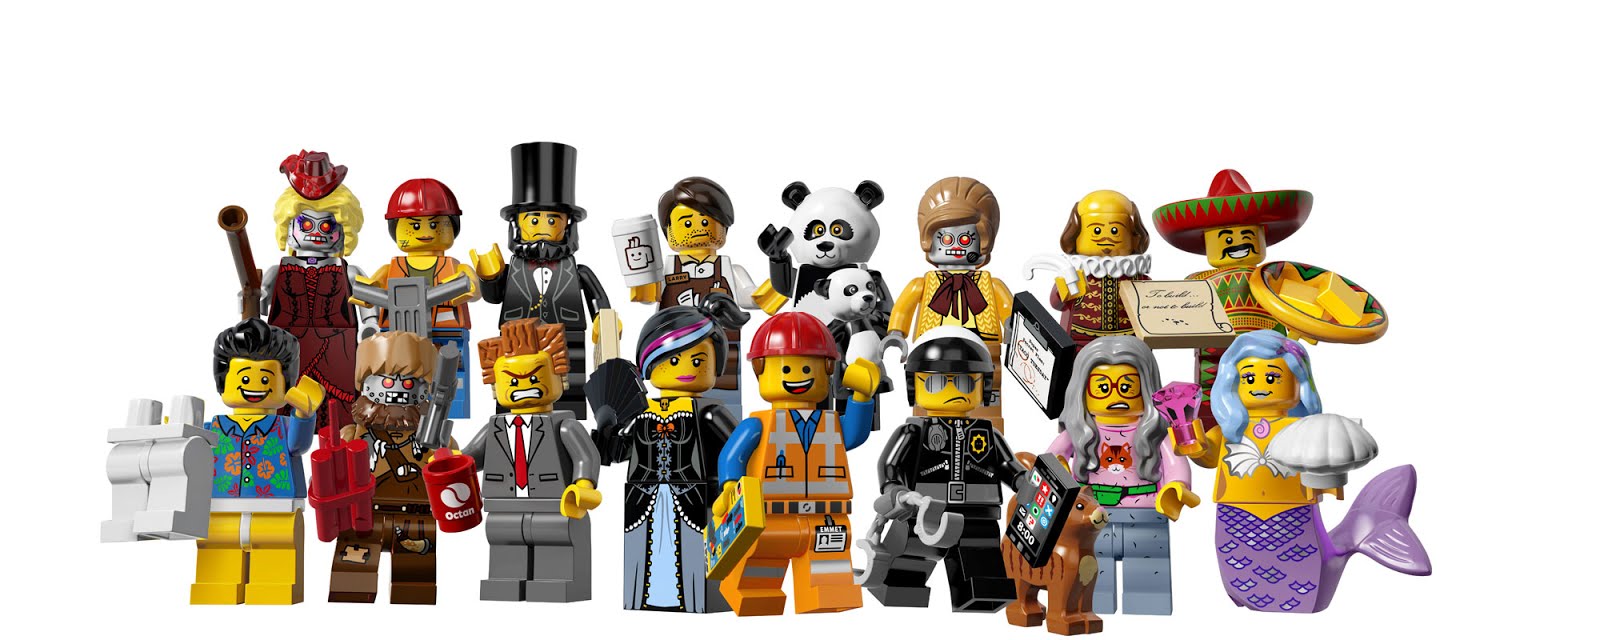 The LEGO Movie Series